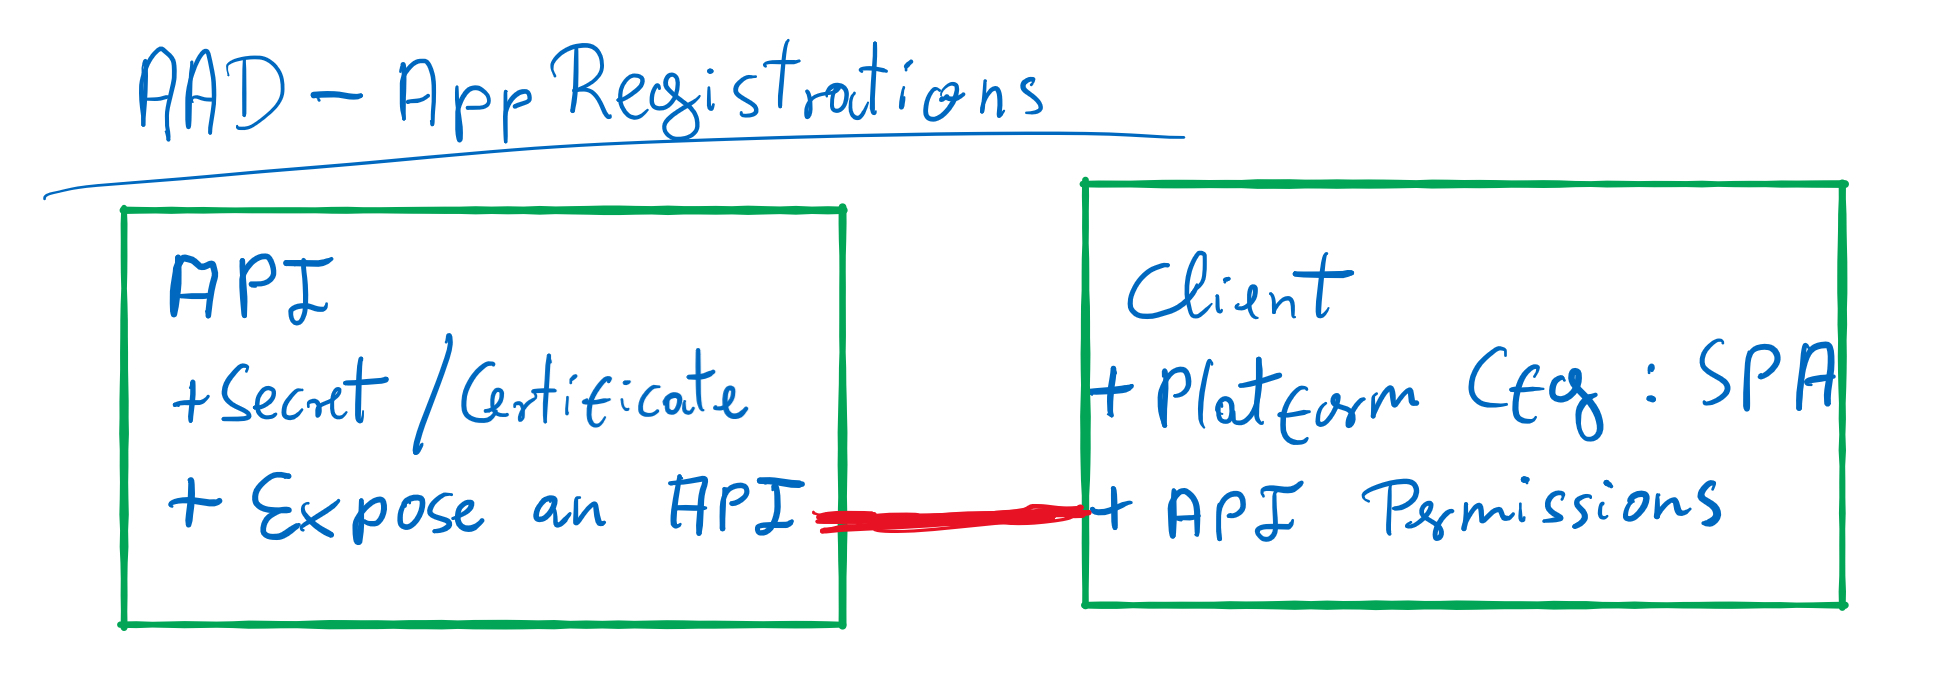 App registrations inside AAD